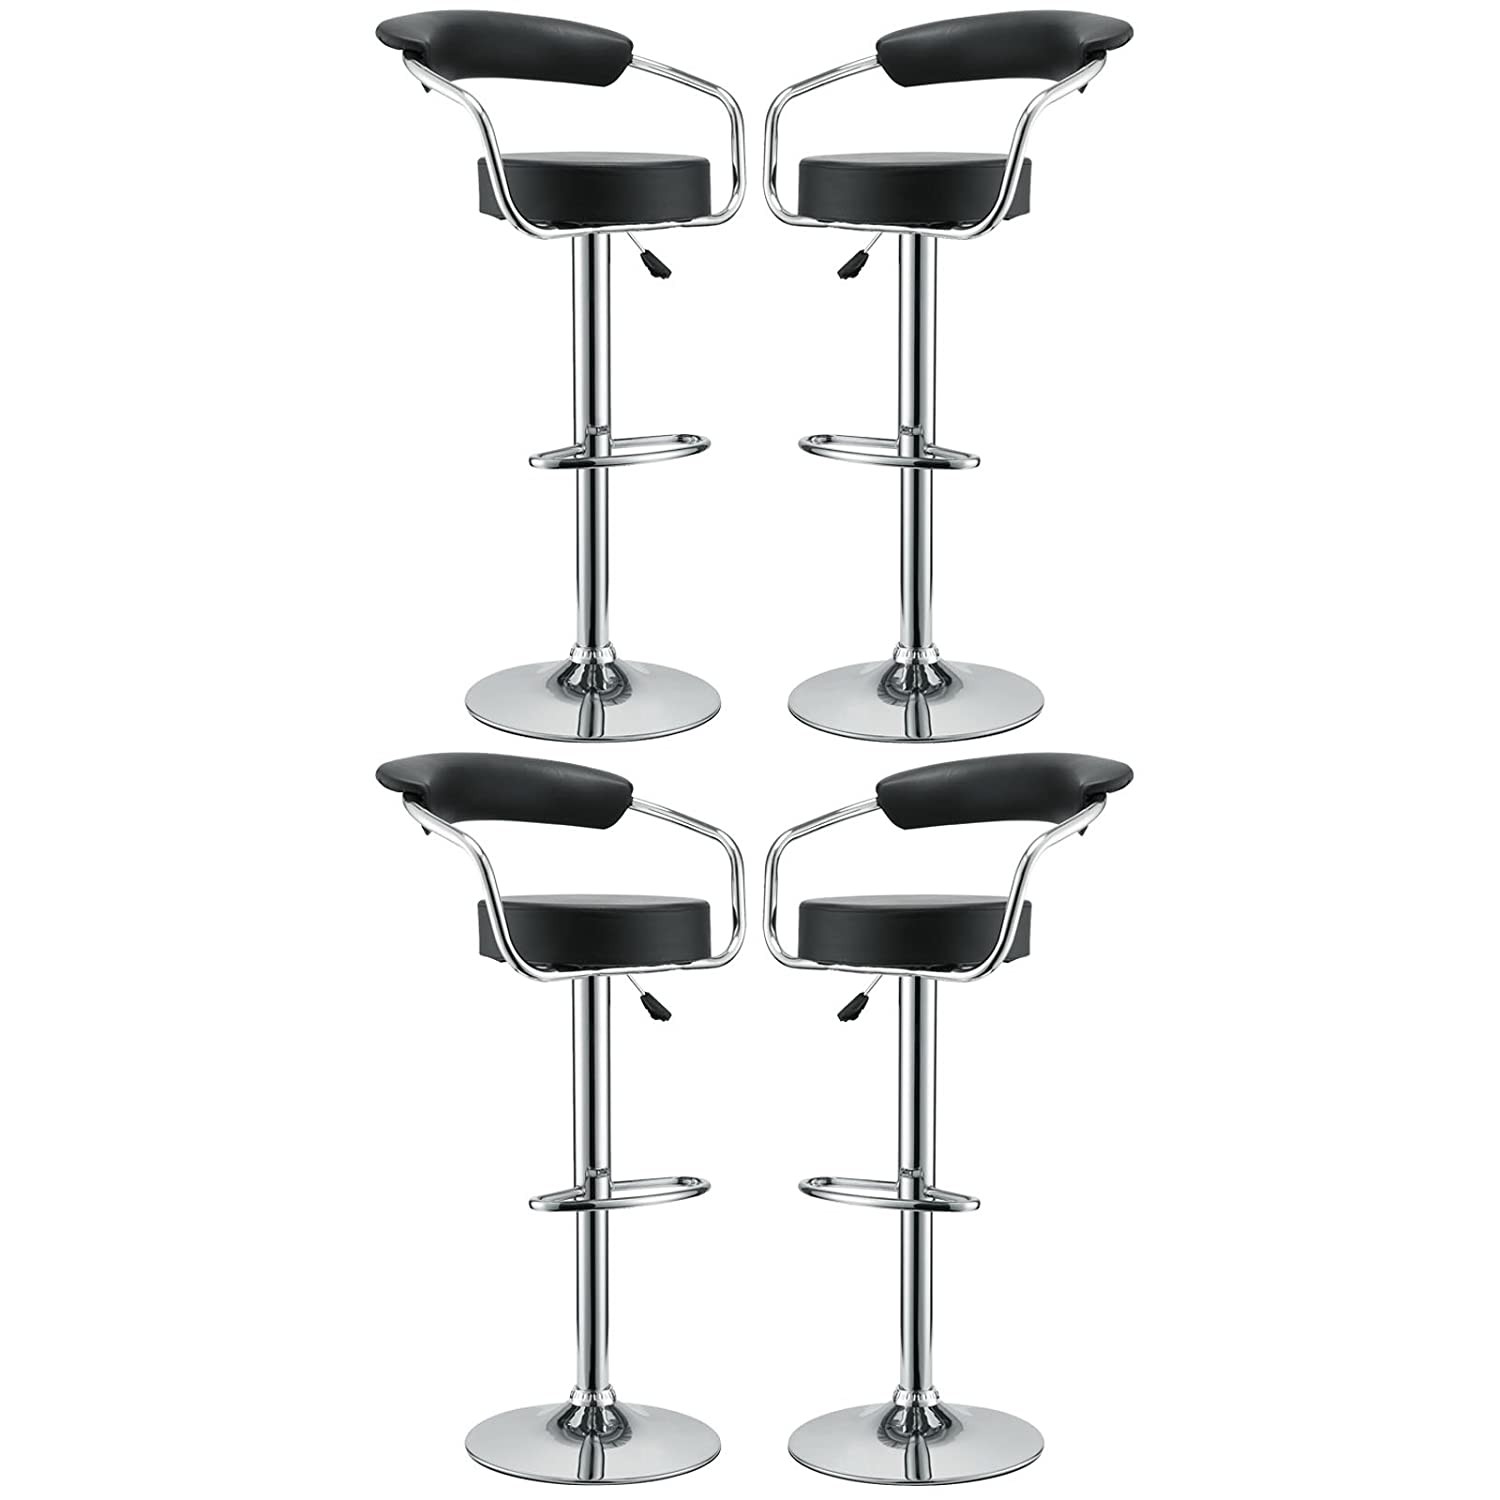 Modway four 50s diner bar stools in black vinyl ebay